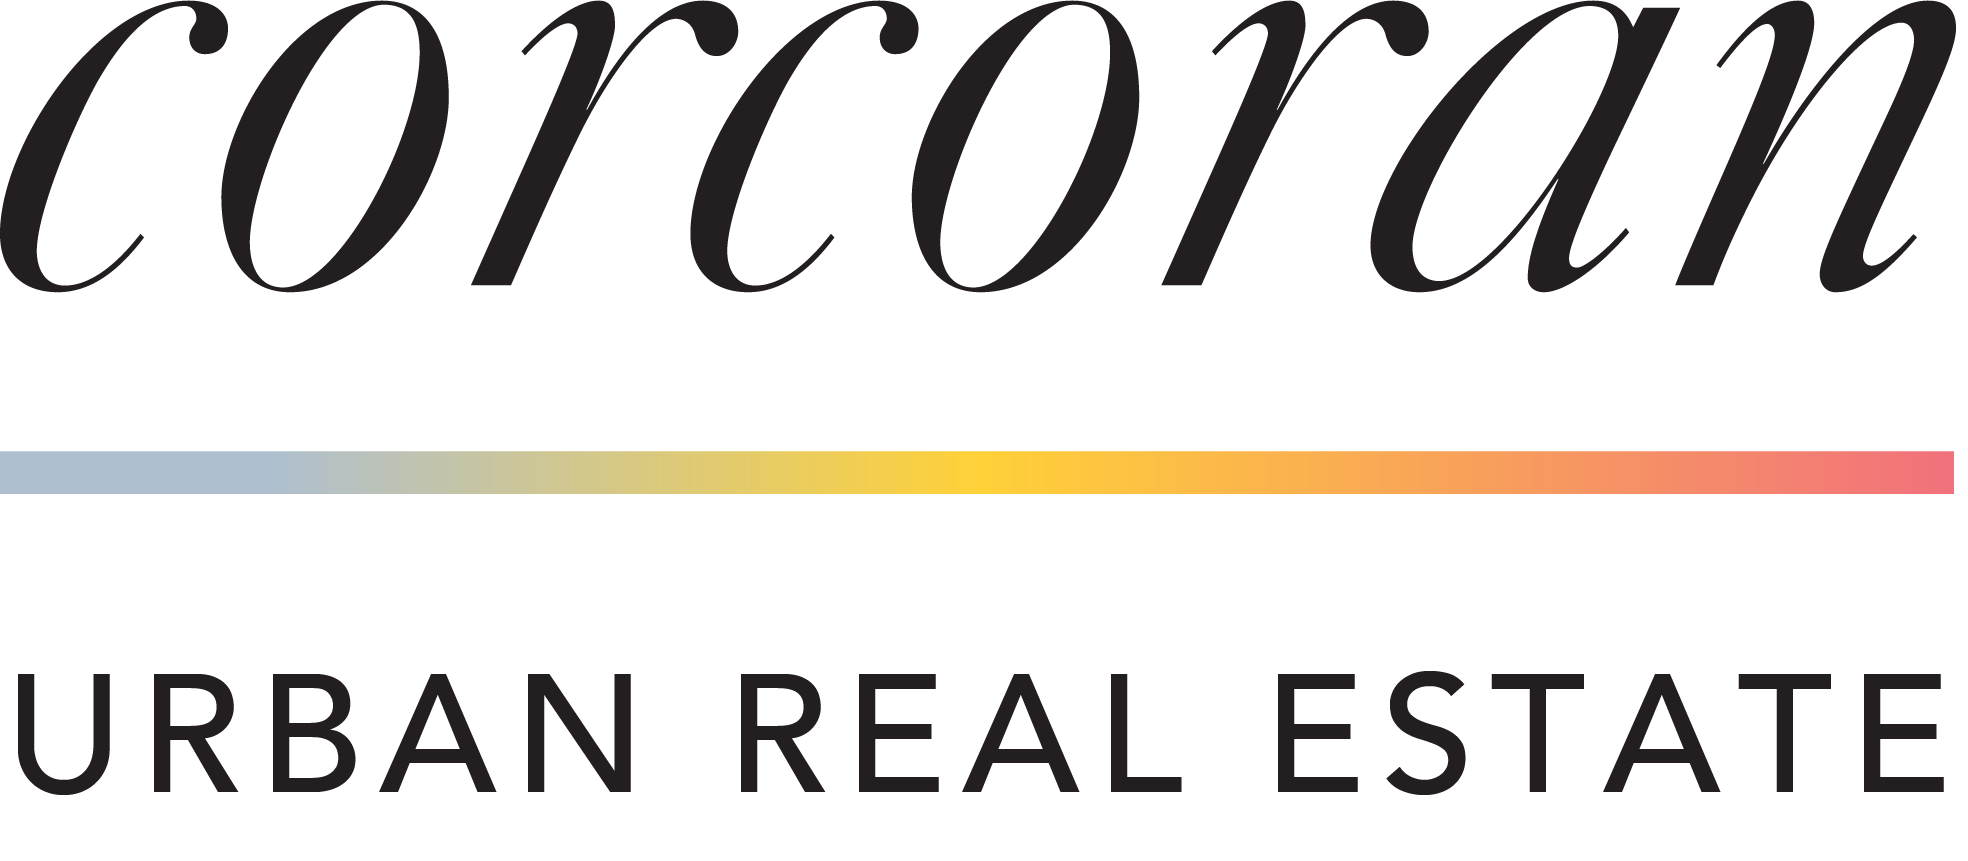 Corcoran Urban Real Estate logo